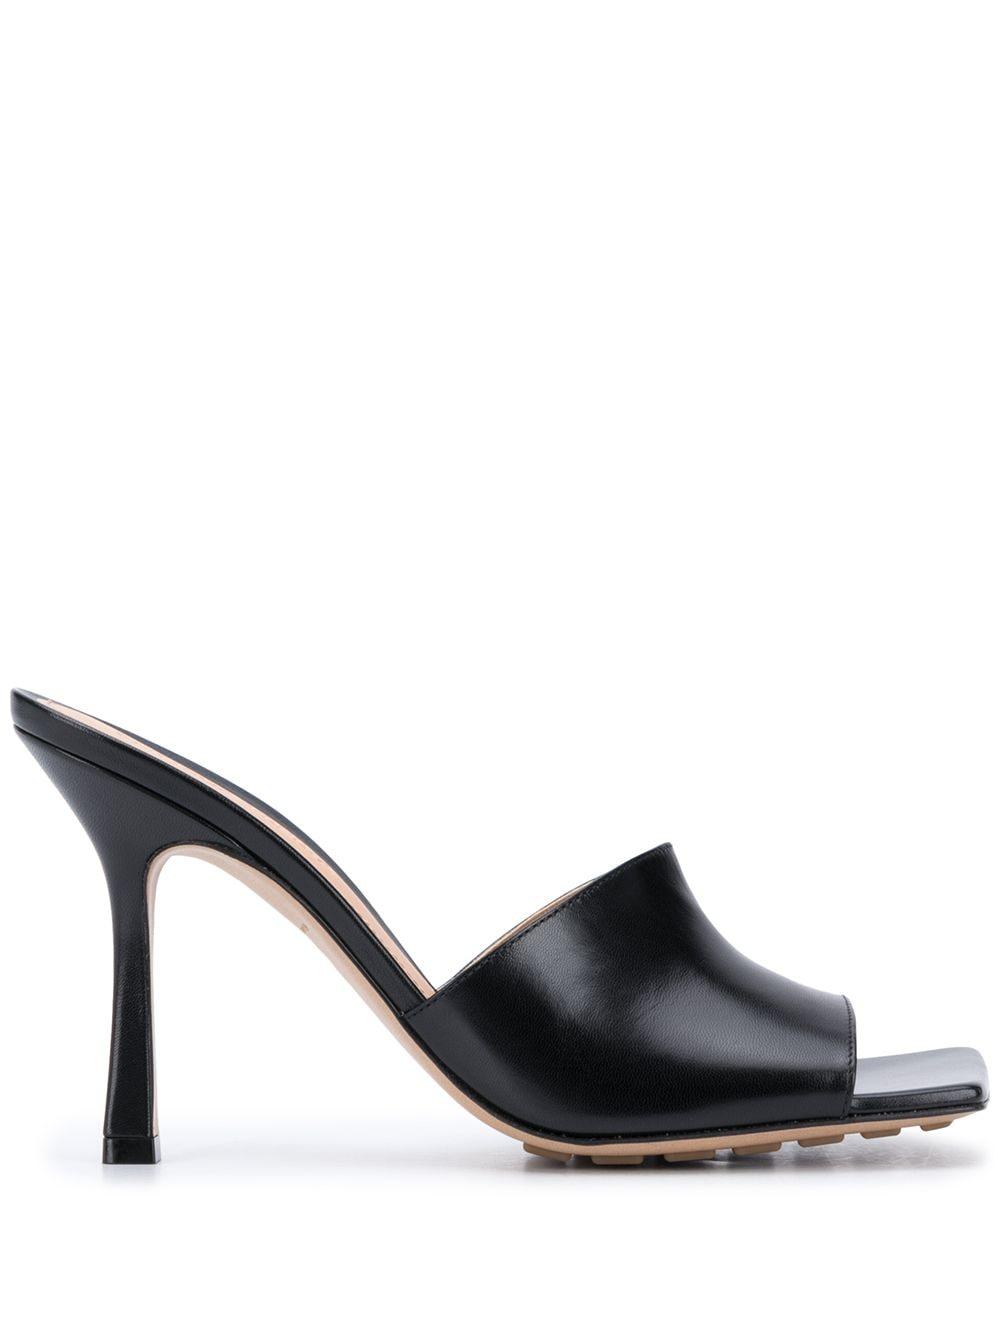 Bottega Veneta Stretch Open Square Toe Sandals in Black - Lyst